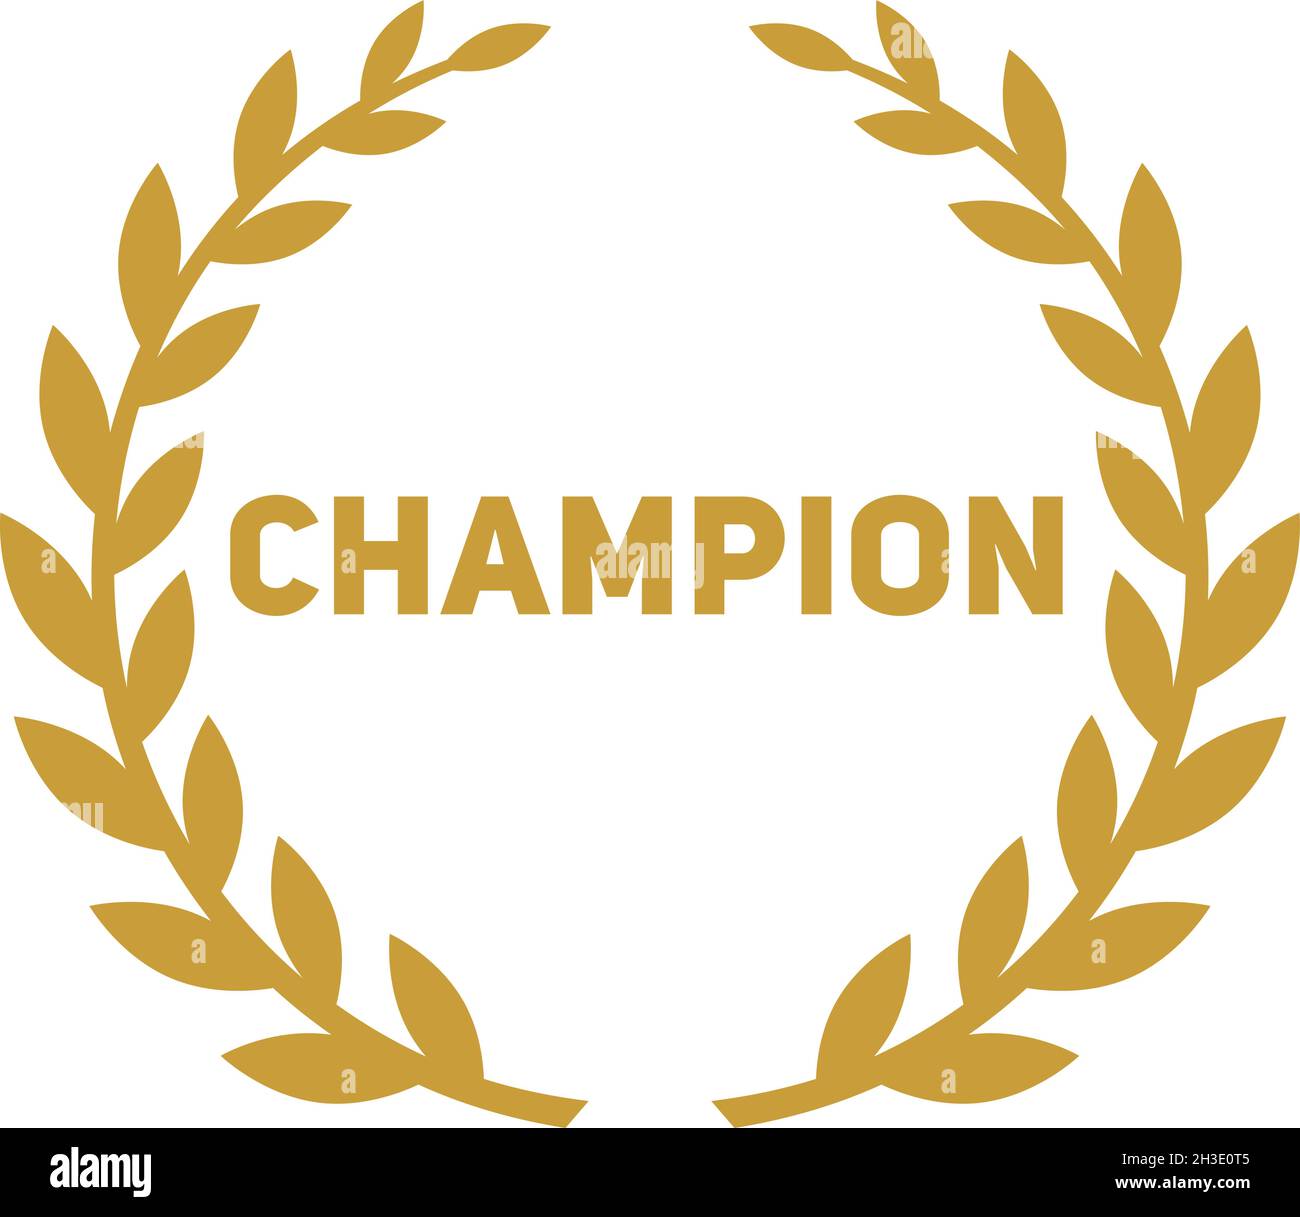 Champion laurel wreath. Golden emblem in ancient greek style Stock Vector  Image & Art - Alamy